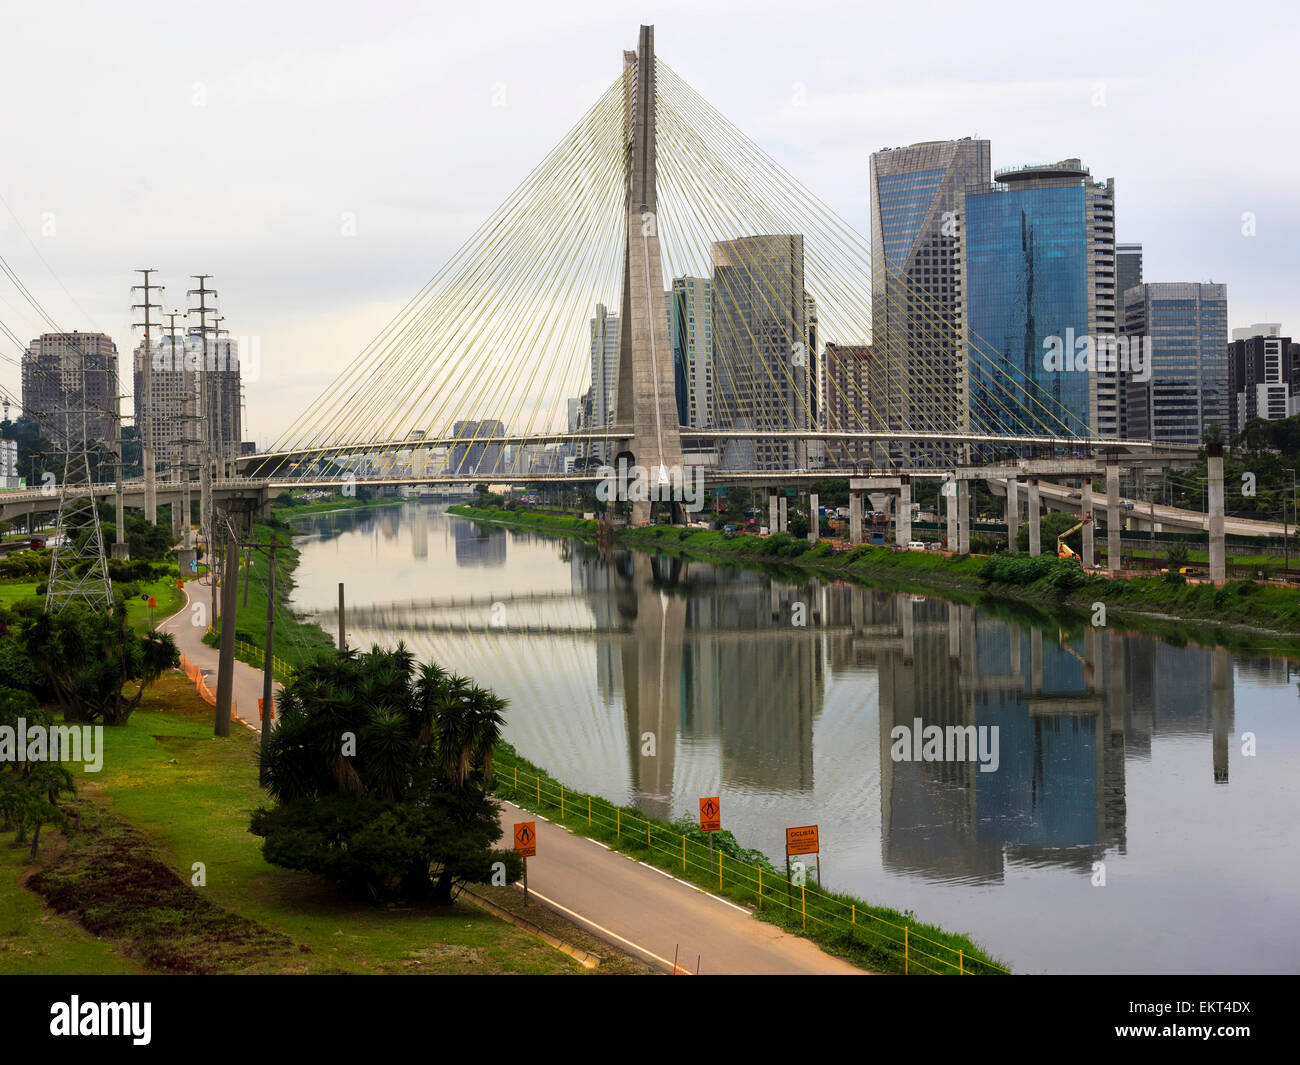 Die Octavio Frias de Oliveira Kabel gebliebene Hängebrücke, aka Ponte Estaiada in Sao Paulo, Brasilien. Stockfoto